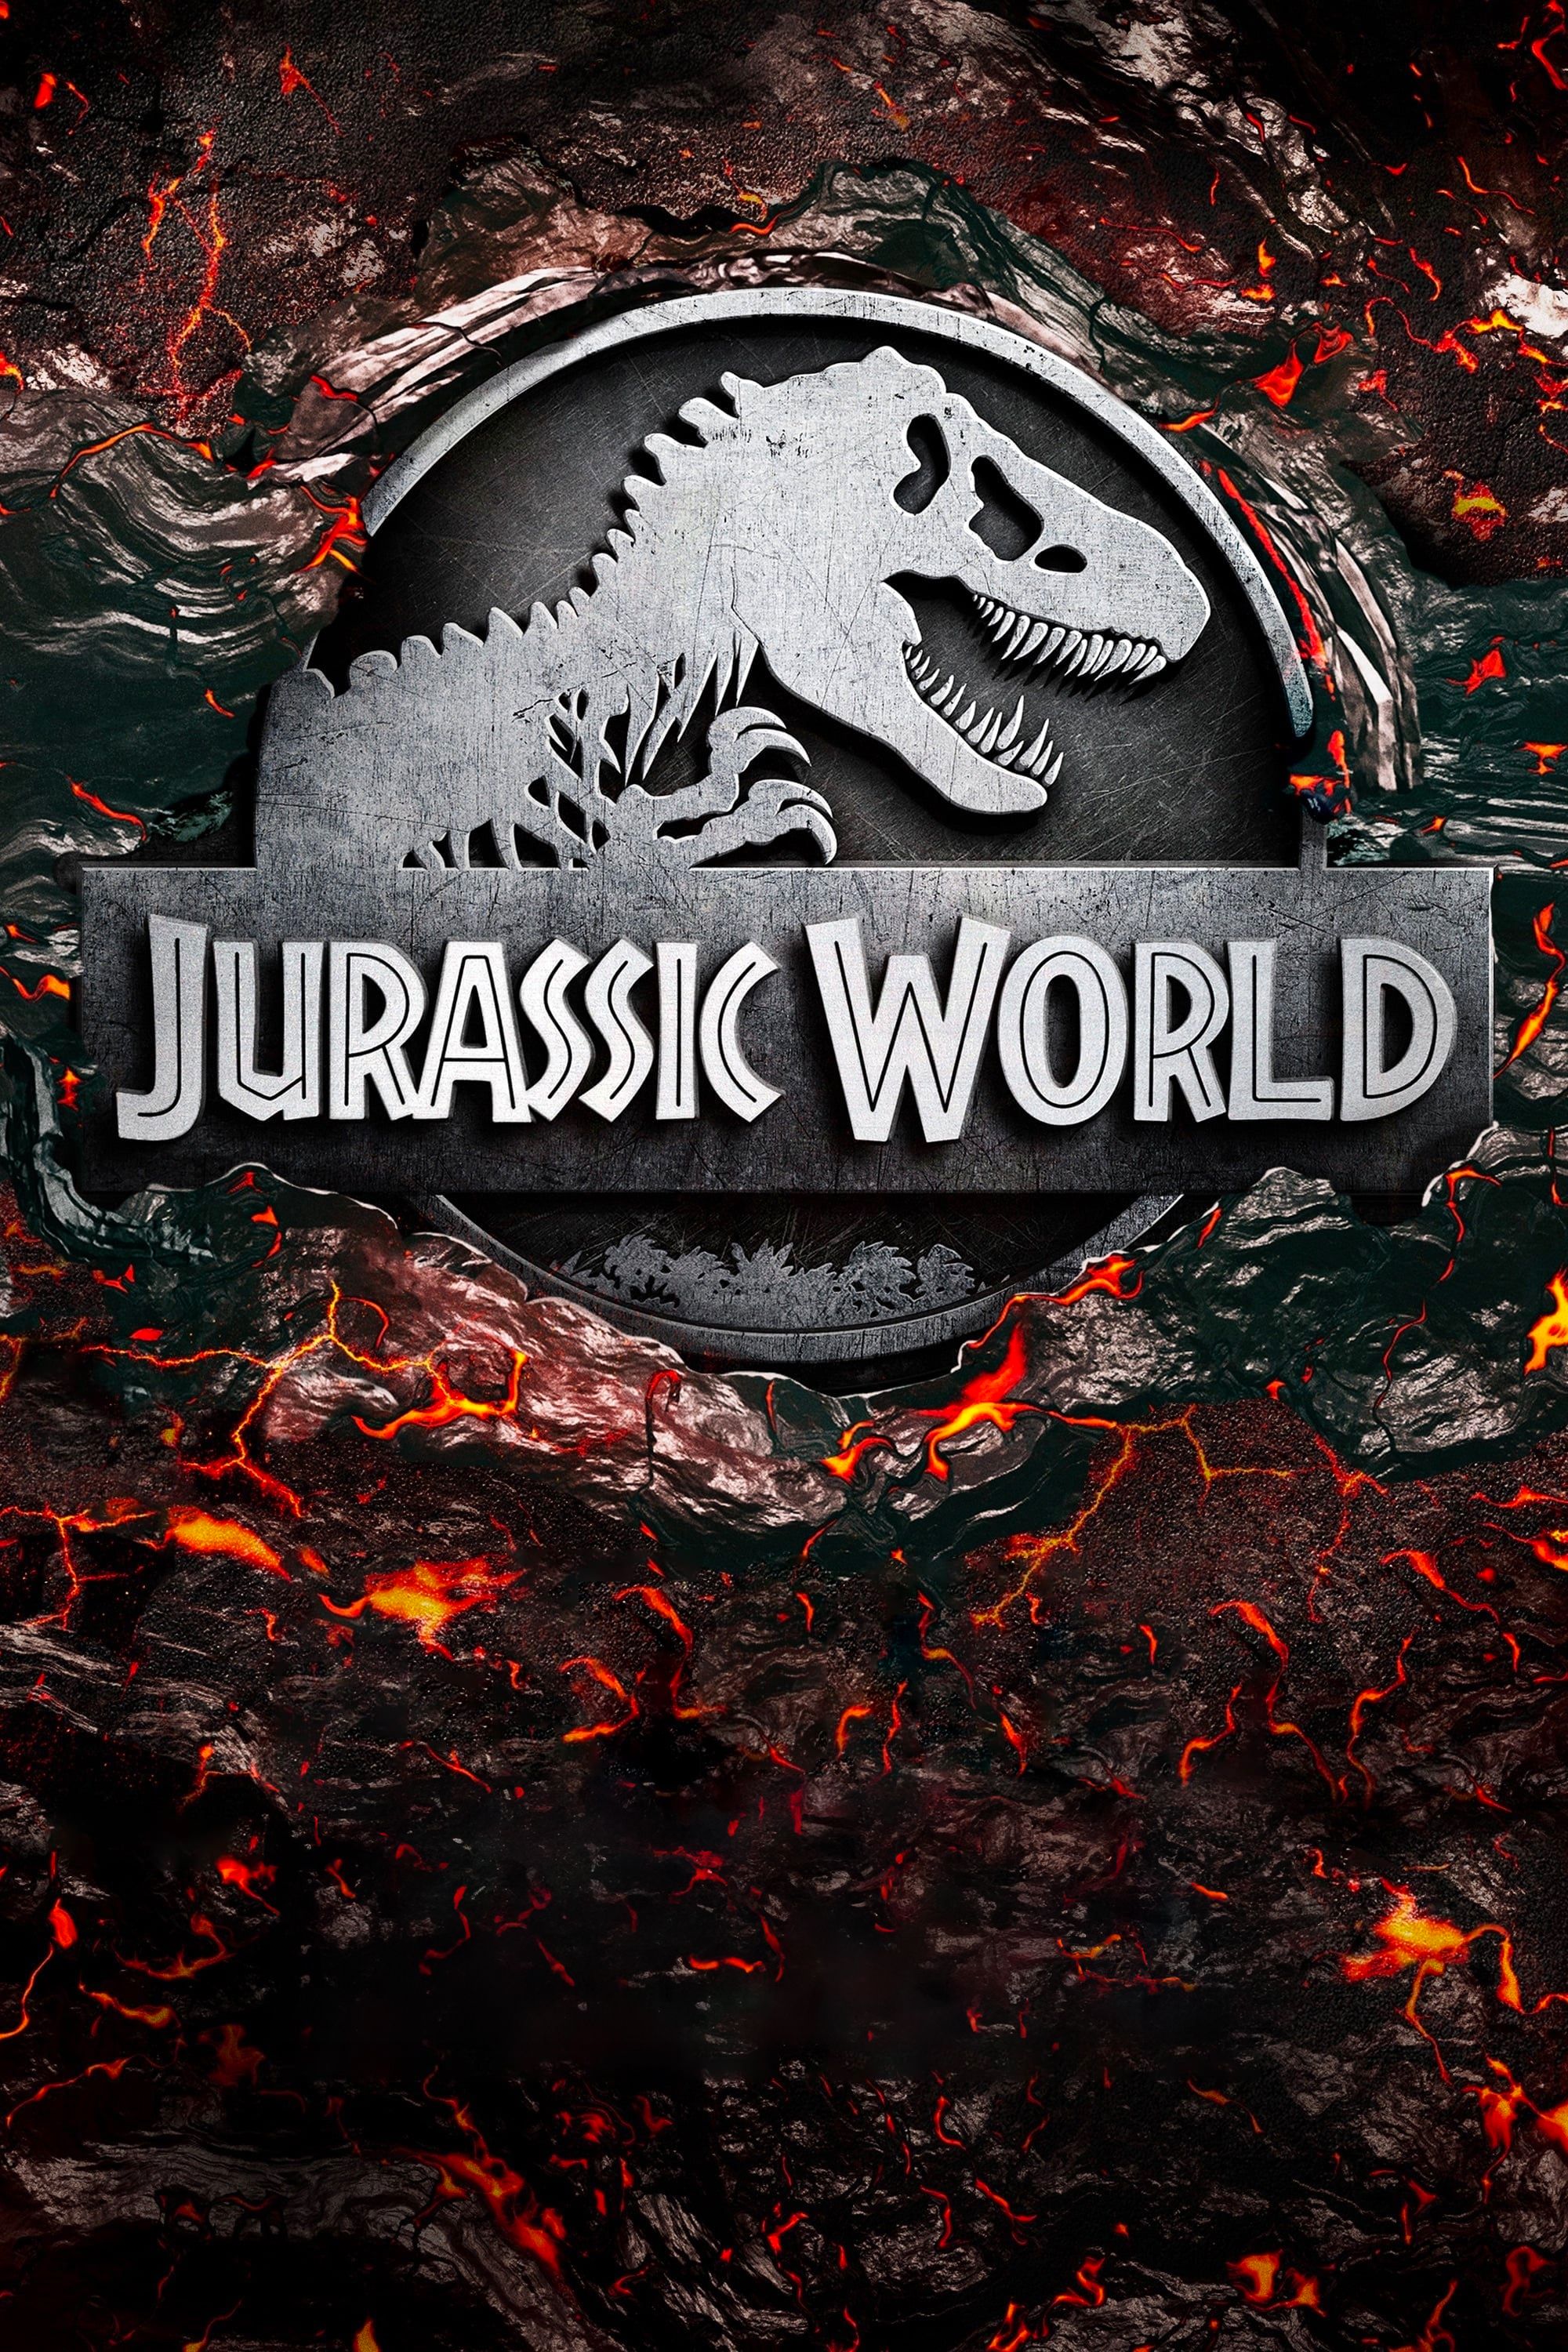 https://static1.srcdn.com/wordpress/wp-content/uploads/2024/01/jurassic-world-movie-poster-showing-the-dinosaur-logo-buried-in-lava.jpg